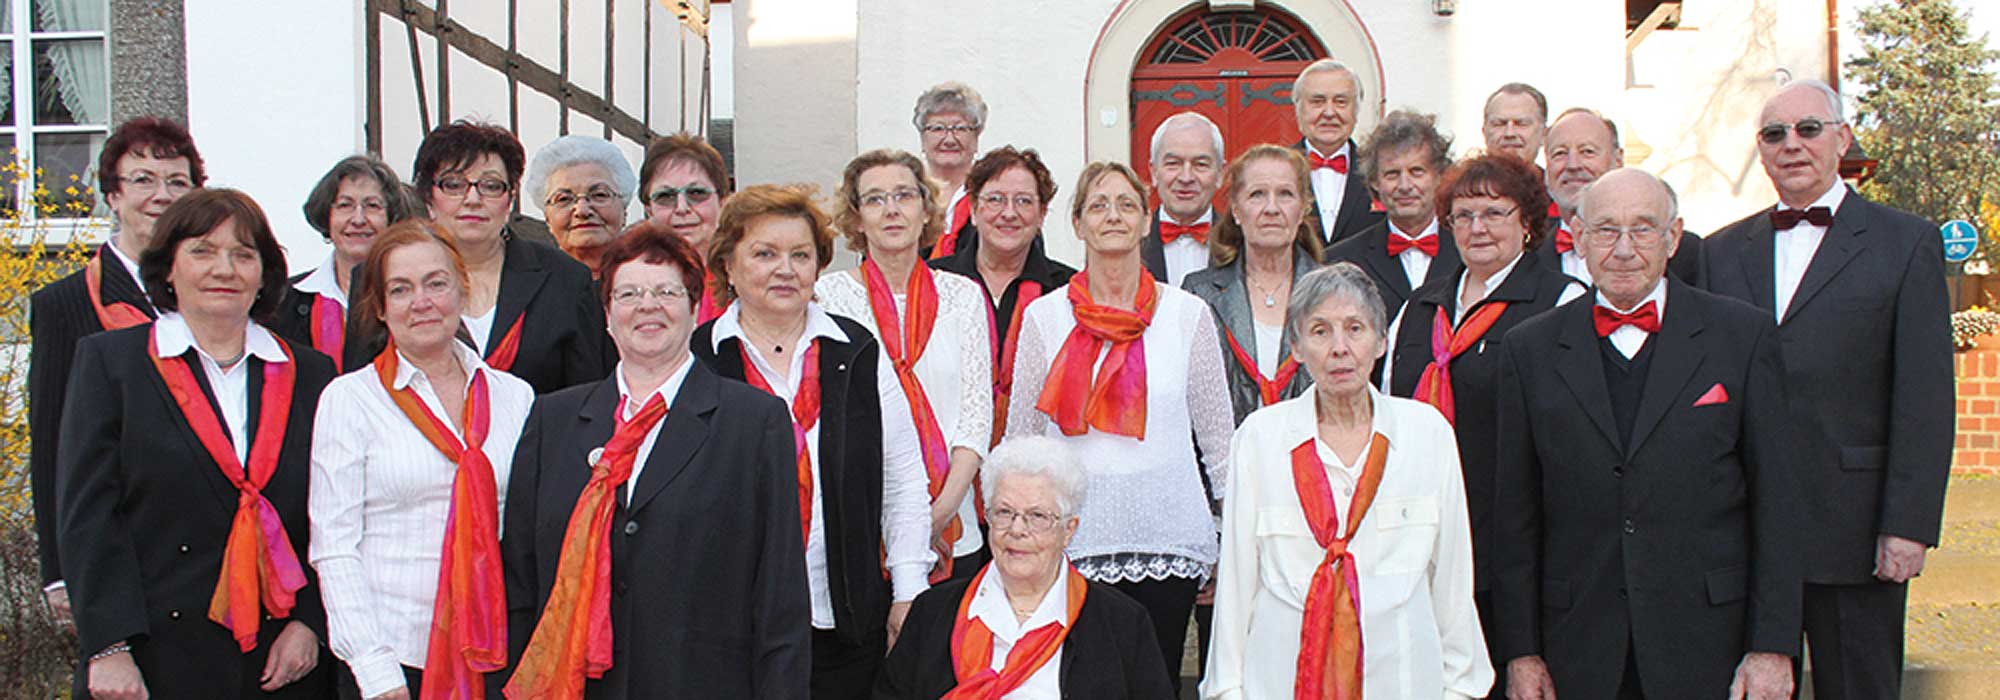 Pfarr-Cäcilien-Chor St. Ägidius Oberdrees